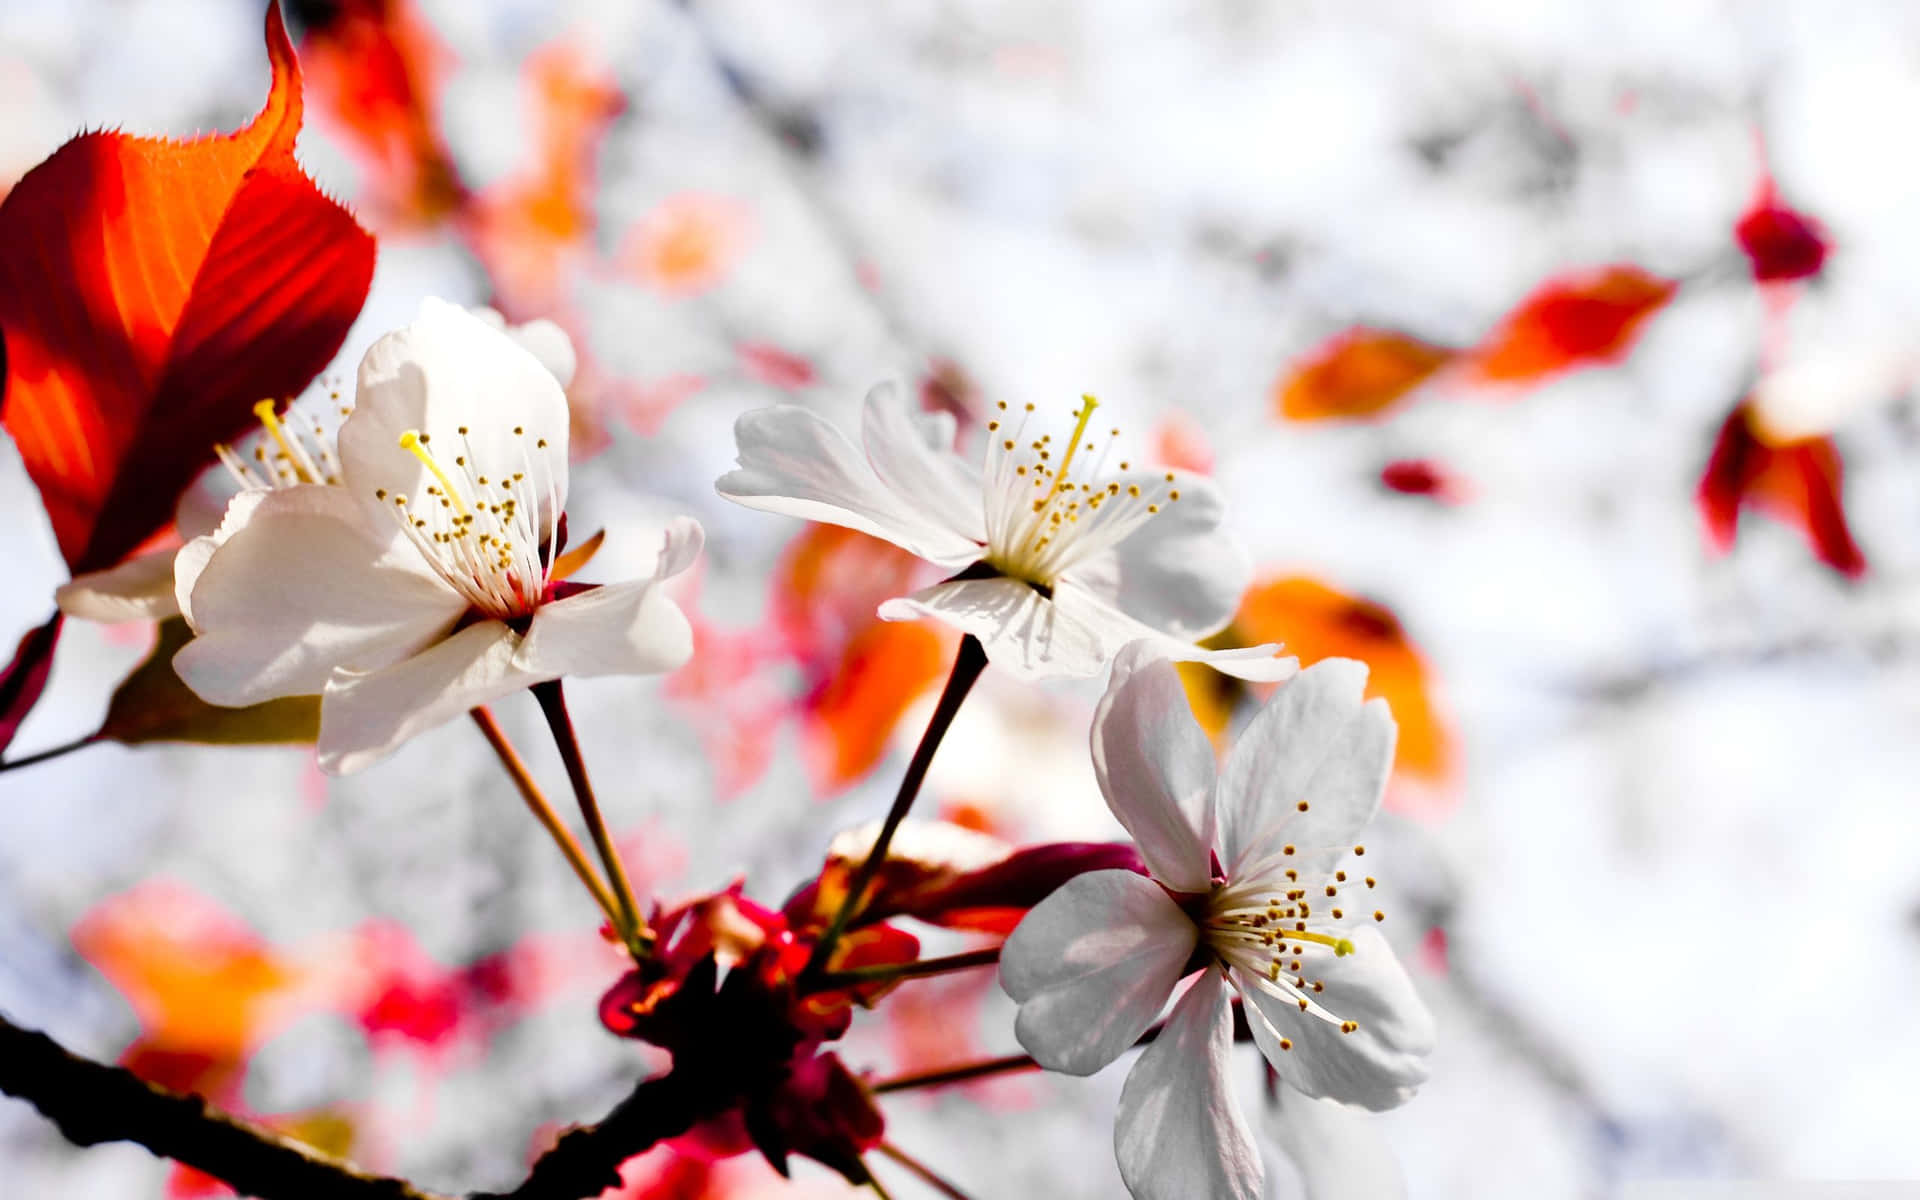 Download Stunning Winter Flowers In Bloom Wallpaper | Wallpapers.com